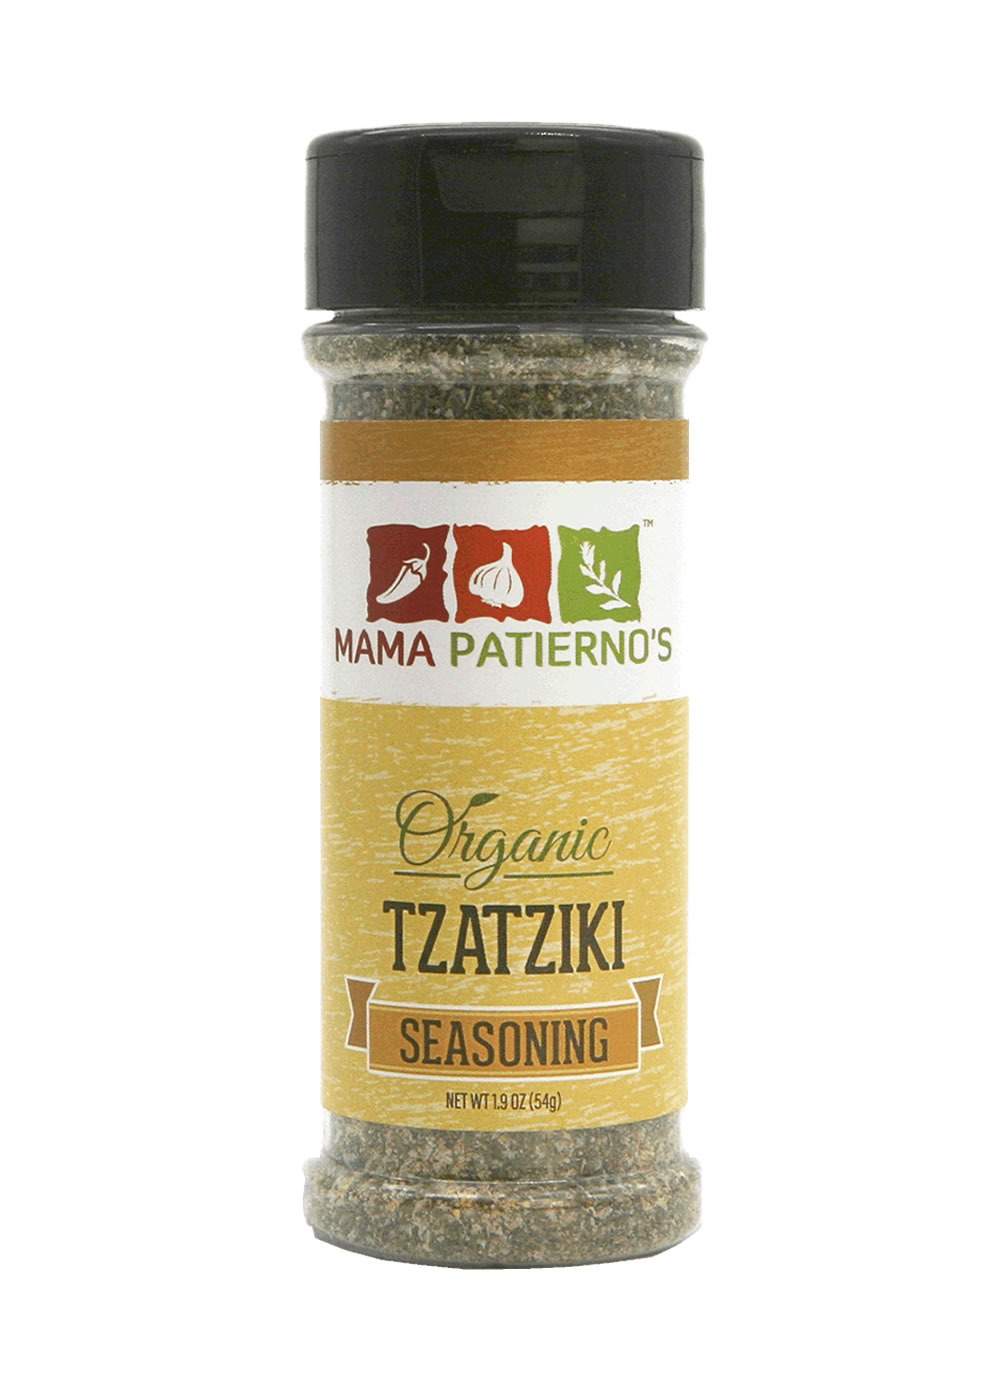 Mama Patierno's Tzatziki Seasoning Page - bottle front view